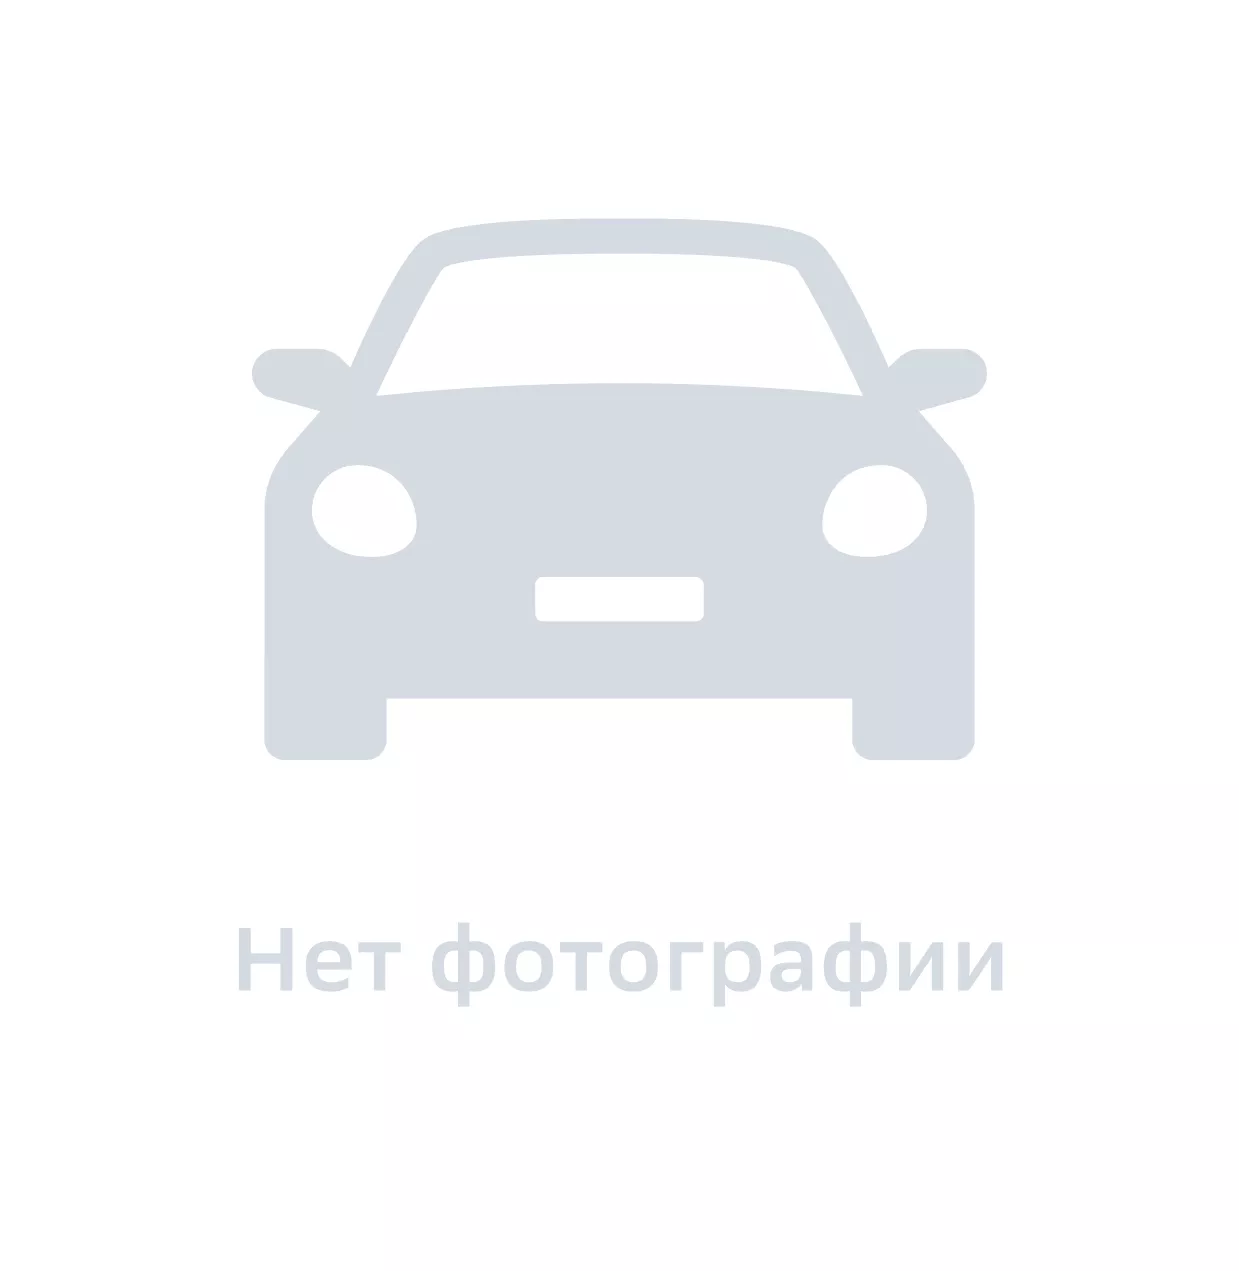 Панель заднего фонаря левая, Hyundai-KIA, арт. 715752F210, цена за 1 шт.